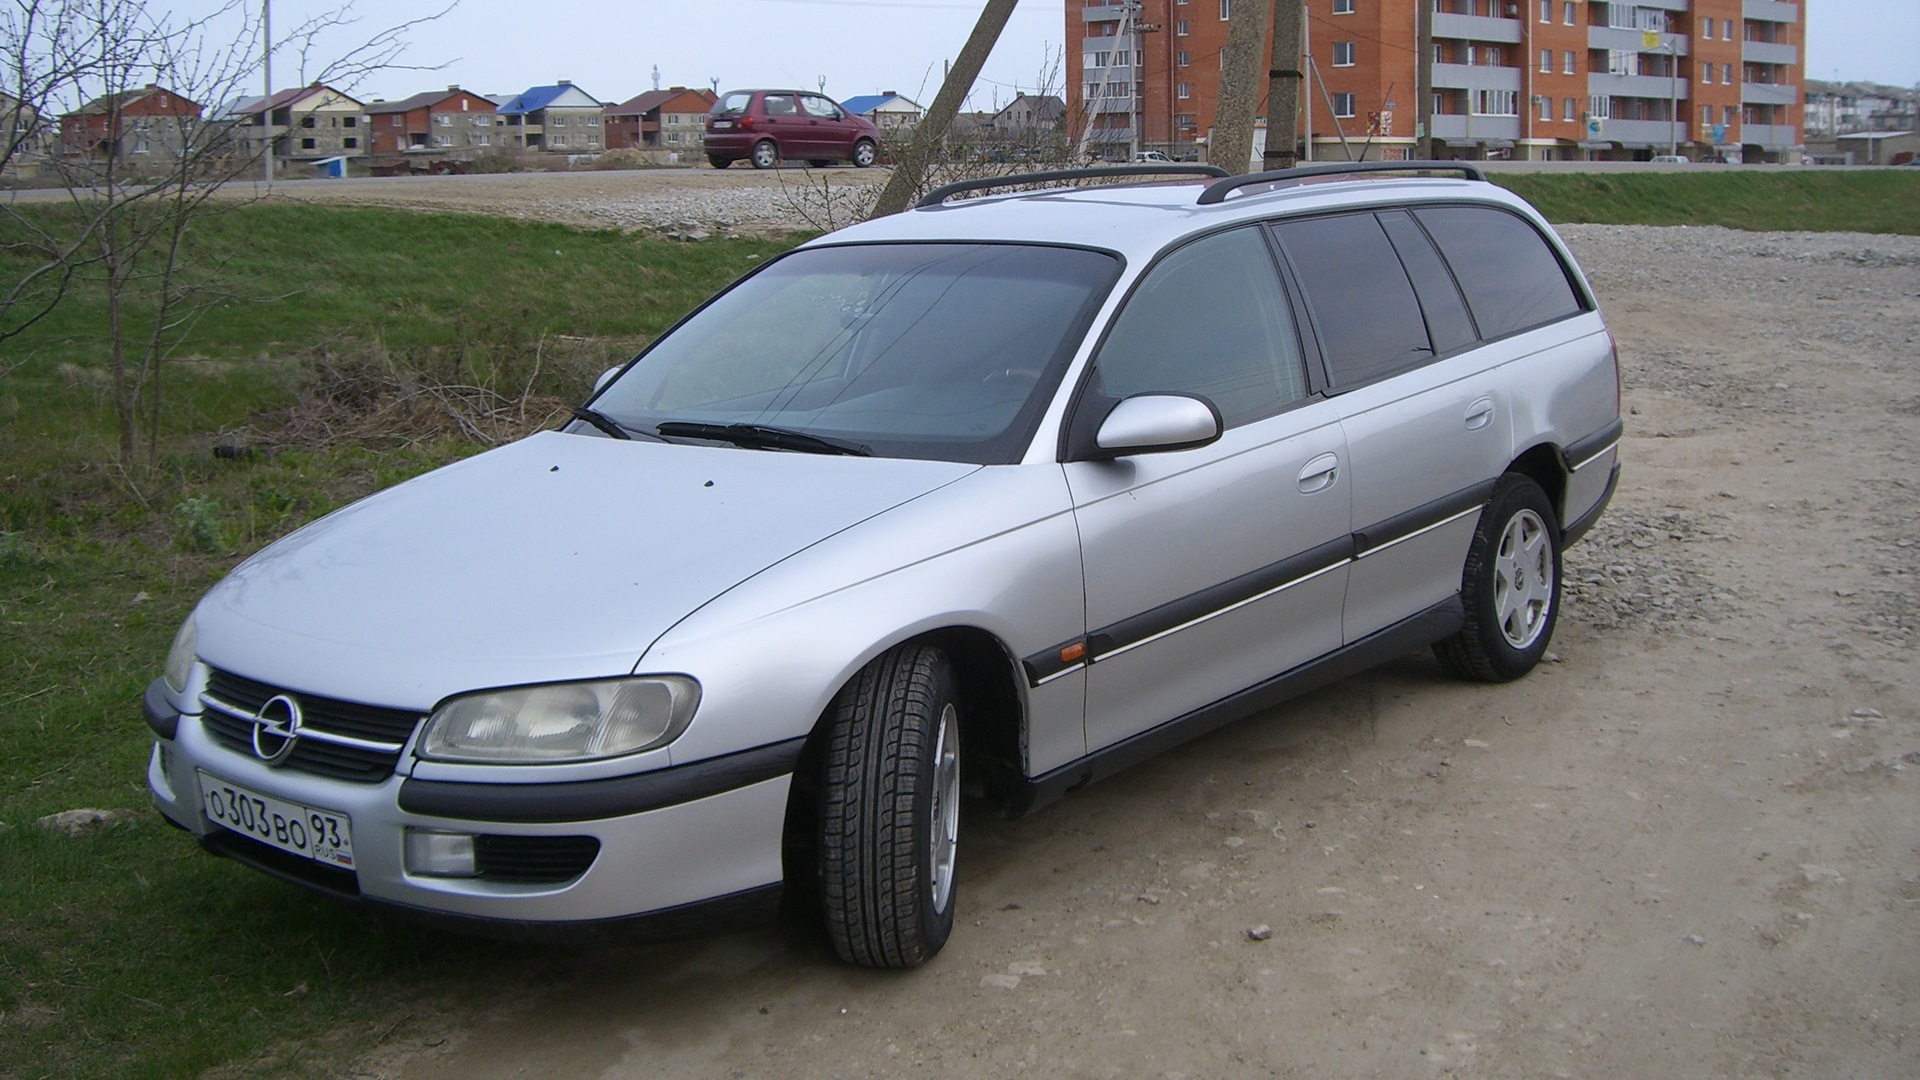 Opel Omega 1997 универсал. Опель Омега 2000 универсал. Опель Омега b 1997 универсал. Opel Omega универсал 2000. Куплю опель омега б универсал